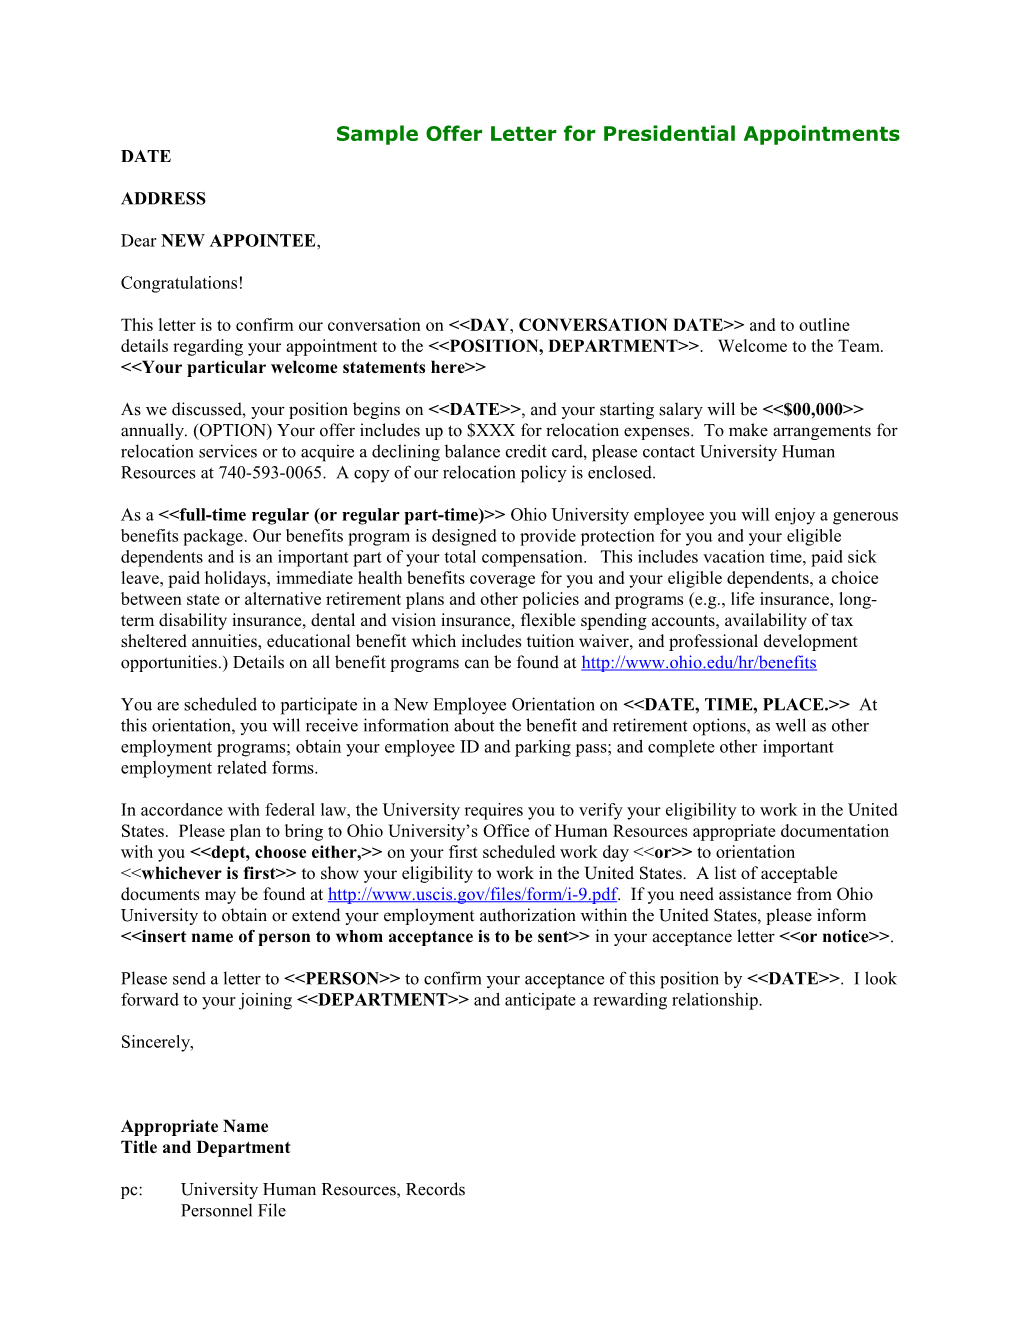 Sample Offer Letter for New Administrative Employees